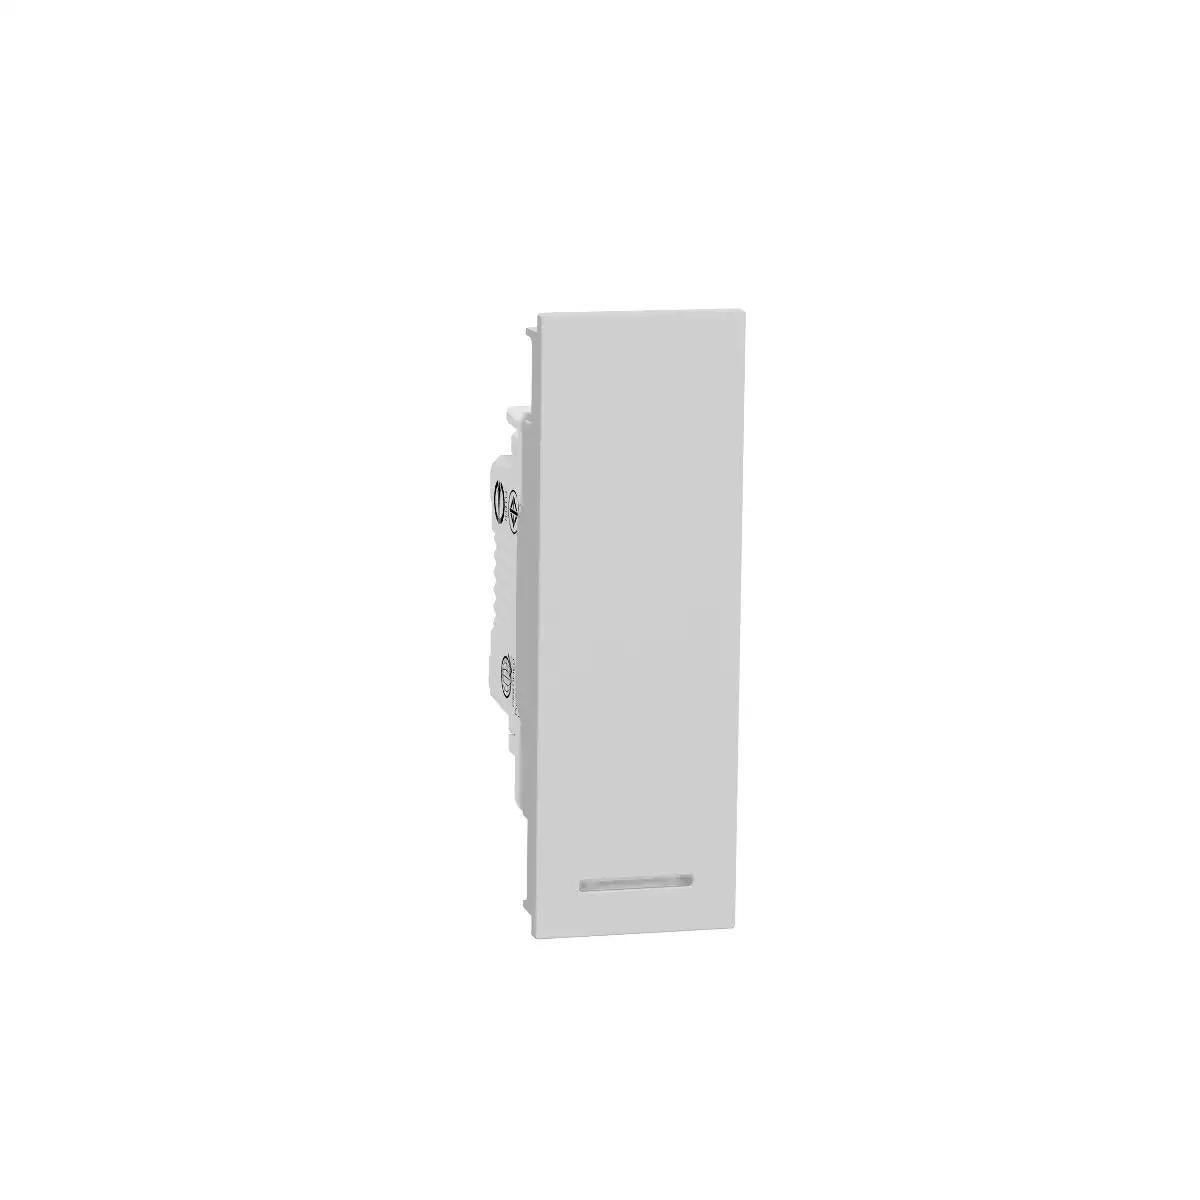 Switch, Avataron A , 16AX 250V, 1 Way with Fluorescent S sized, Grey